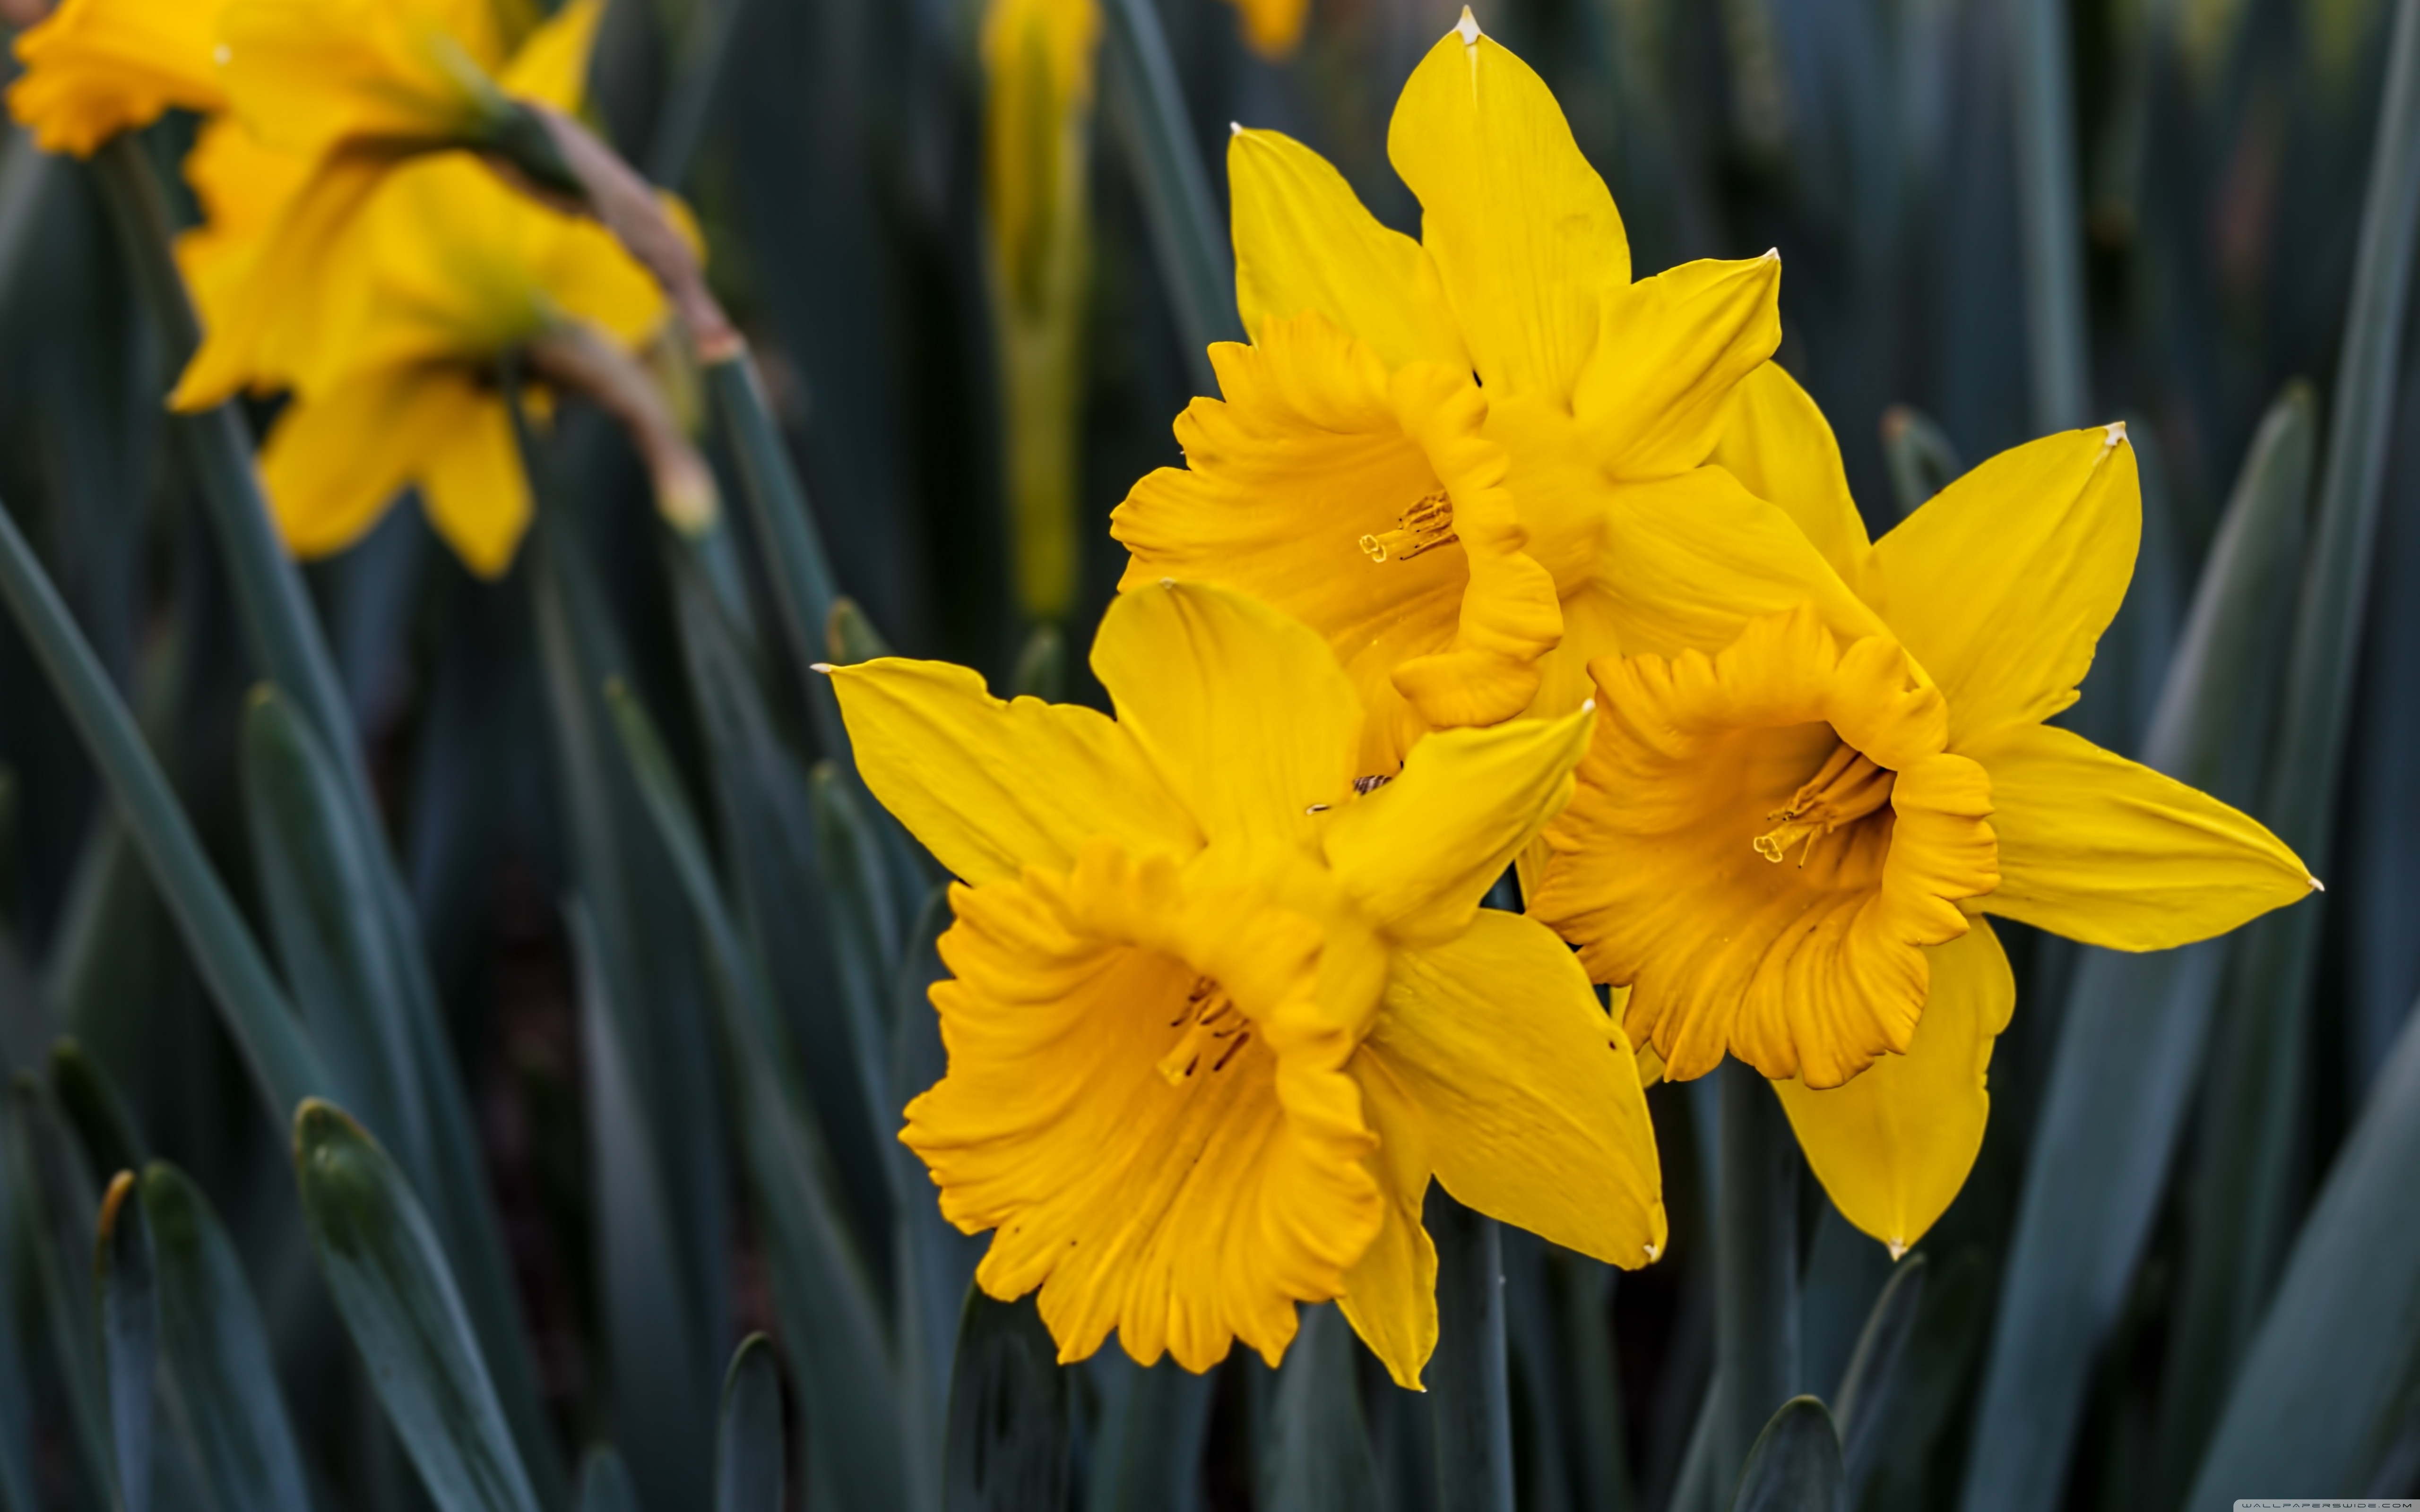 Beautiful Daffodils Ultra HD Desktop Background Wallpaper for 4K UHD TV, Multi Display, Dual Monitor, Tablet